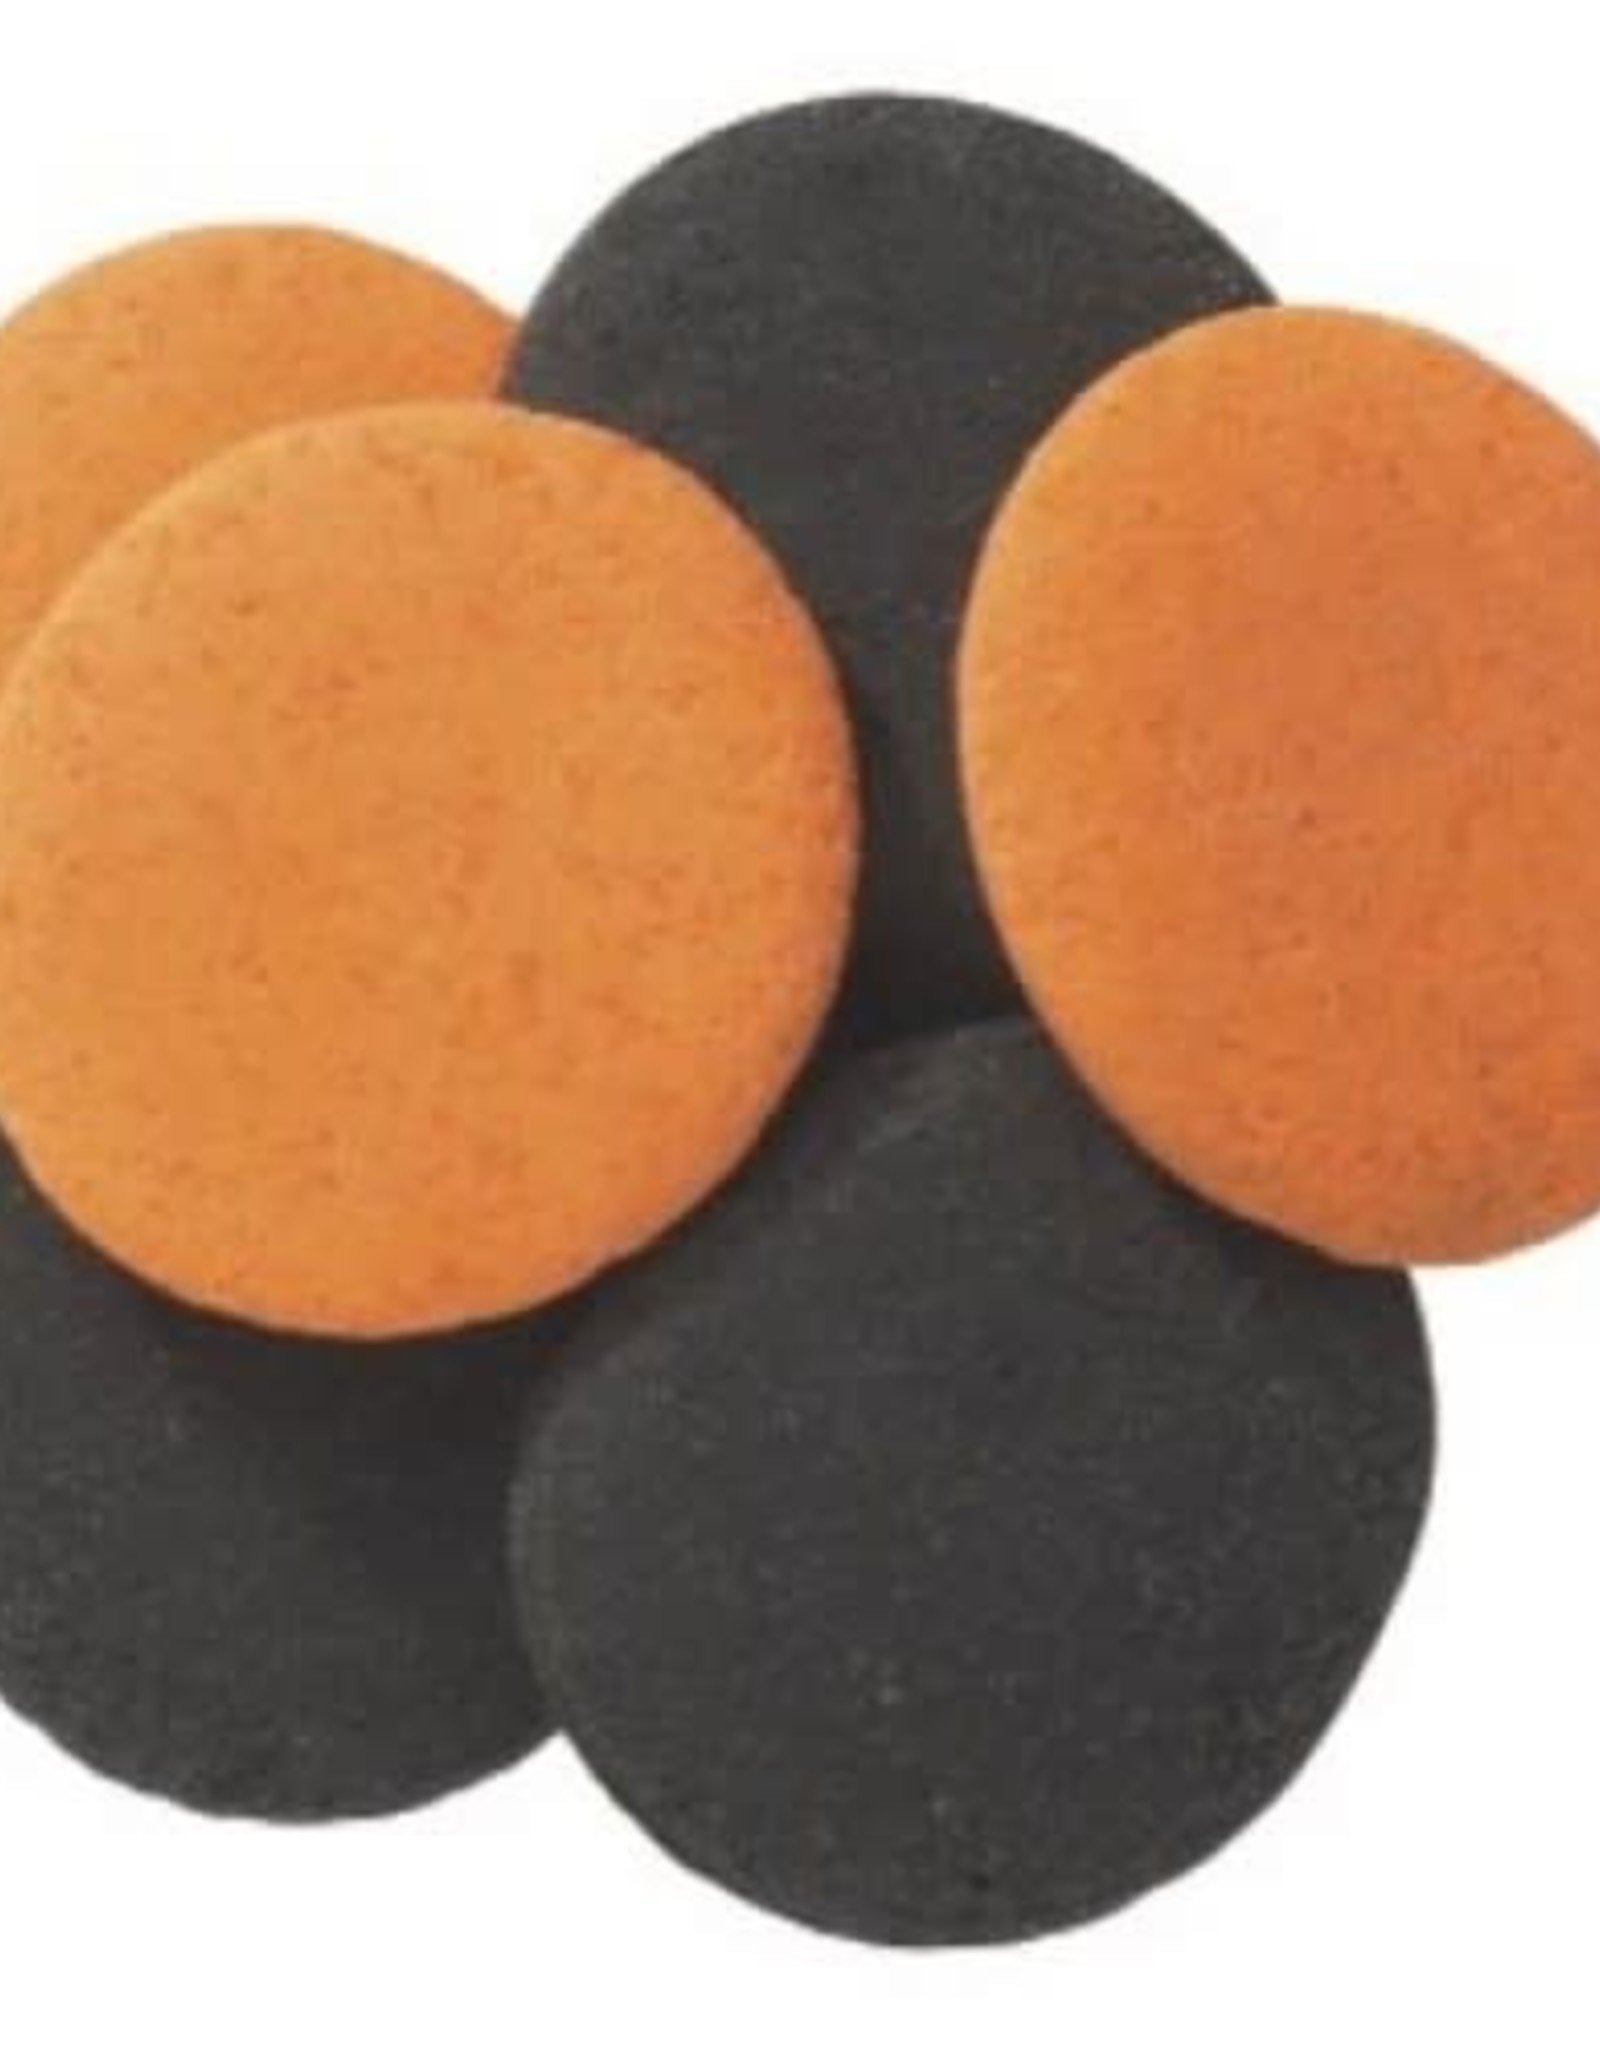 Sequin Jumbo Quins (Black and Orange)